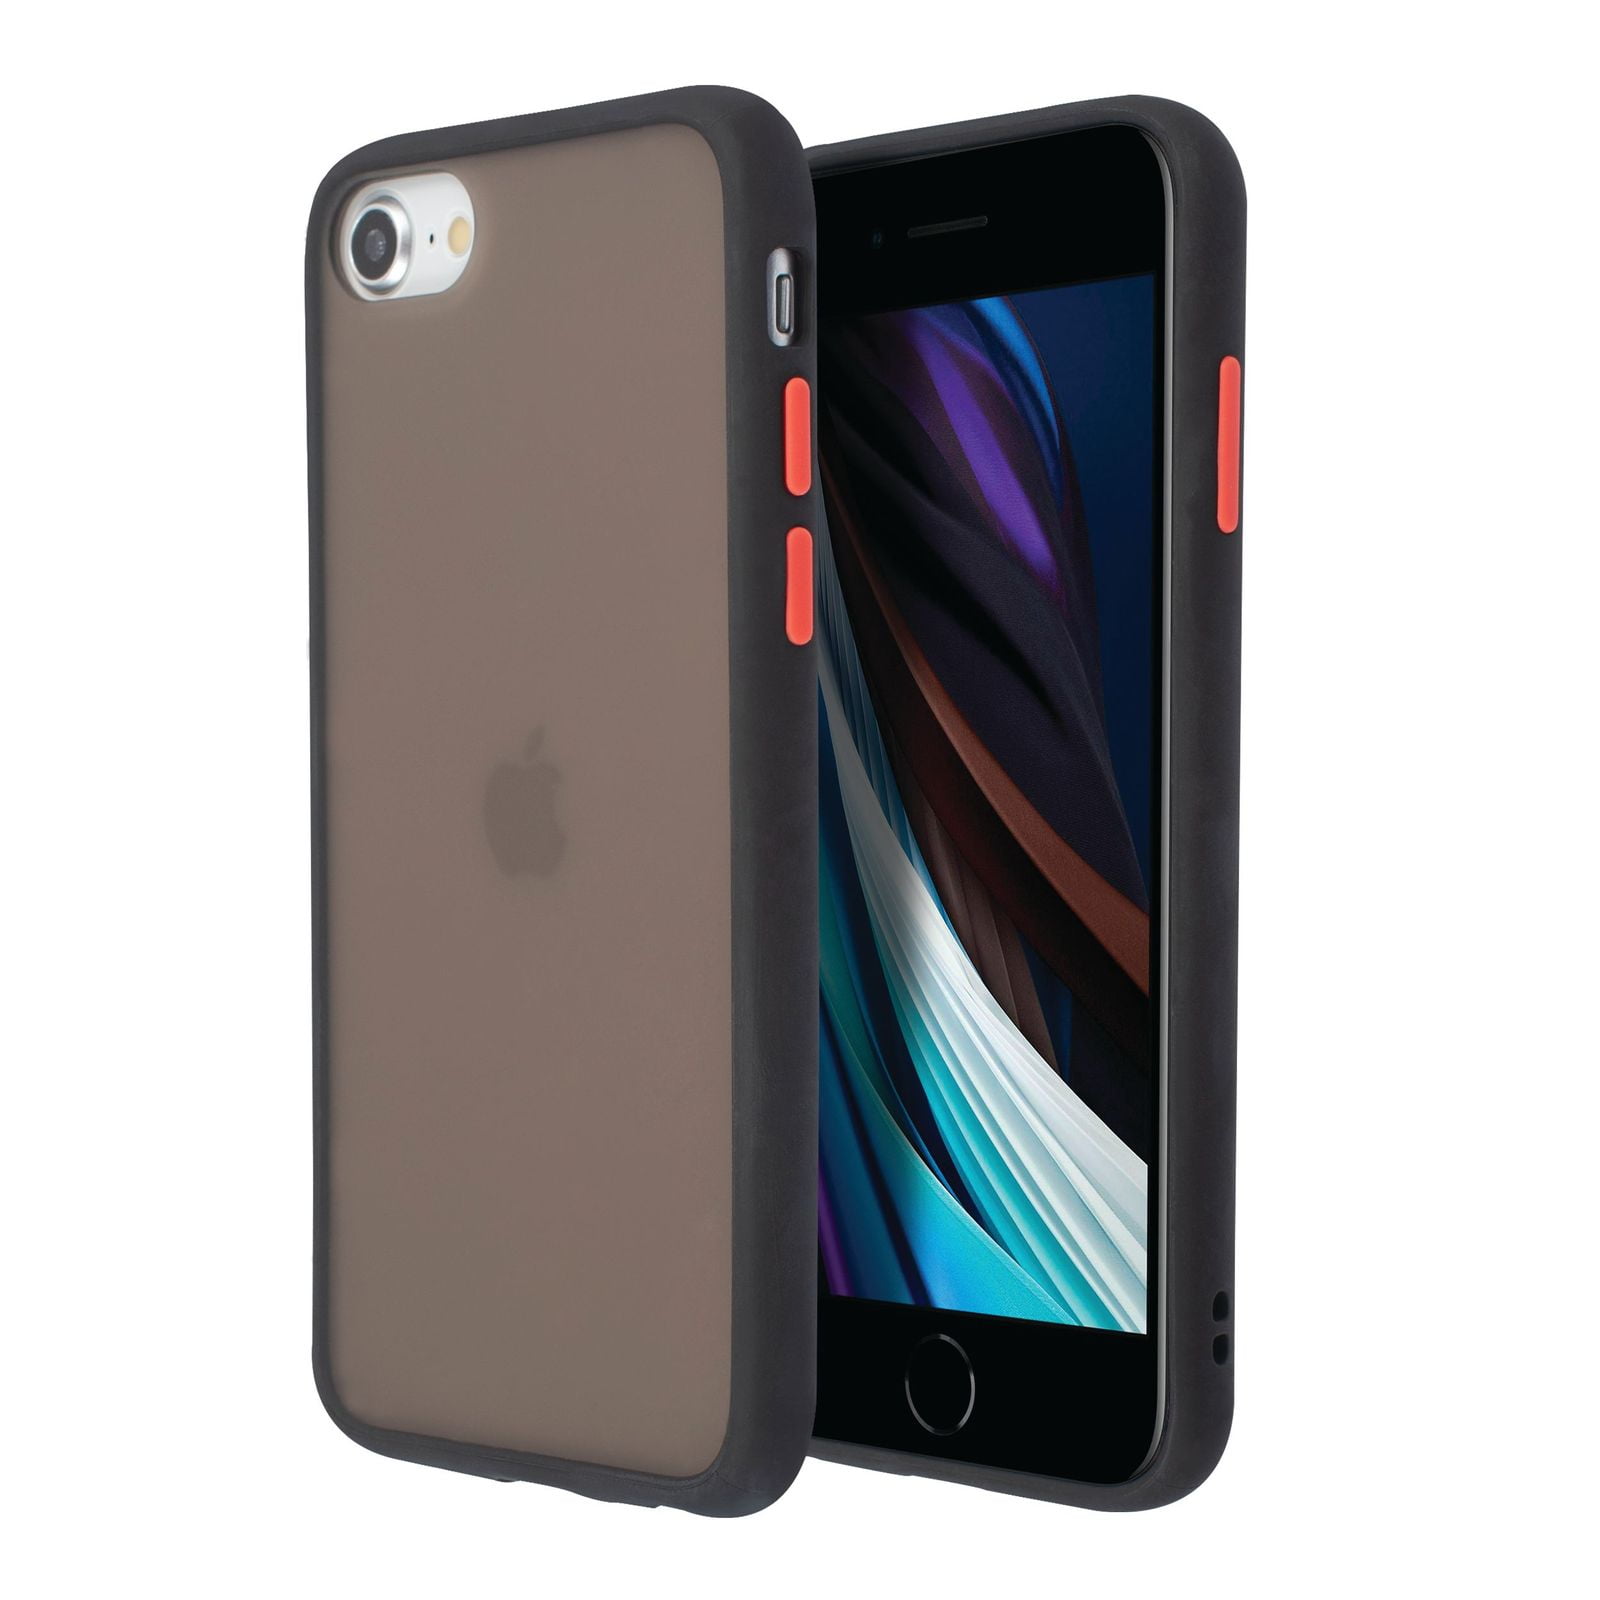 Translucent Matte Case For Iphone Se 2nd Gen Hybrid Hard Back Soft Edges Tpu Full Body Cover Black Red By Insten Walmart Com